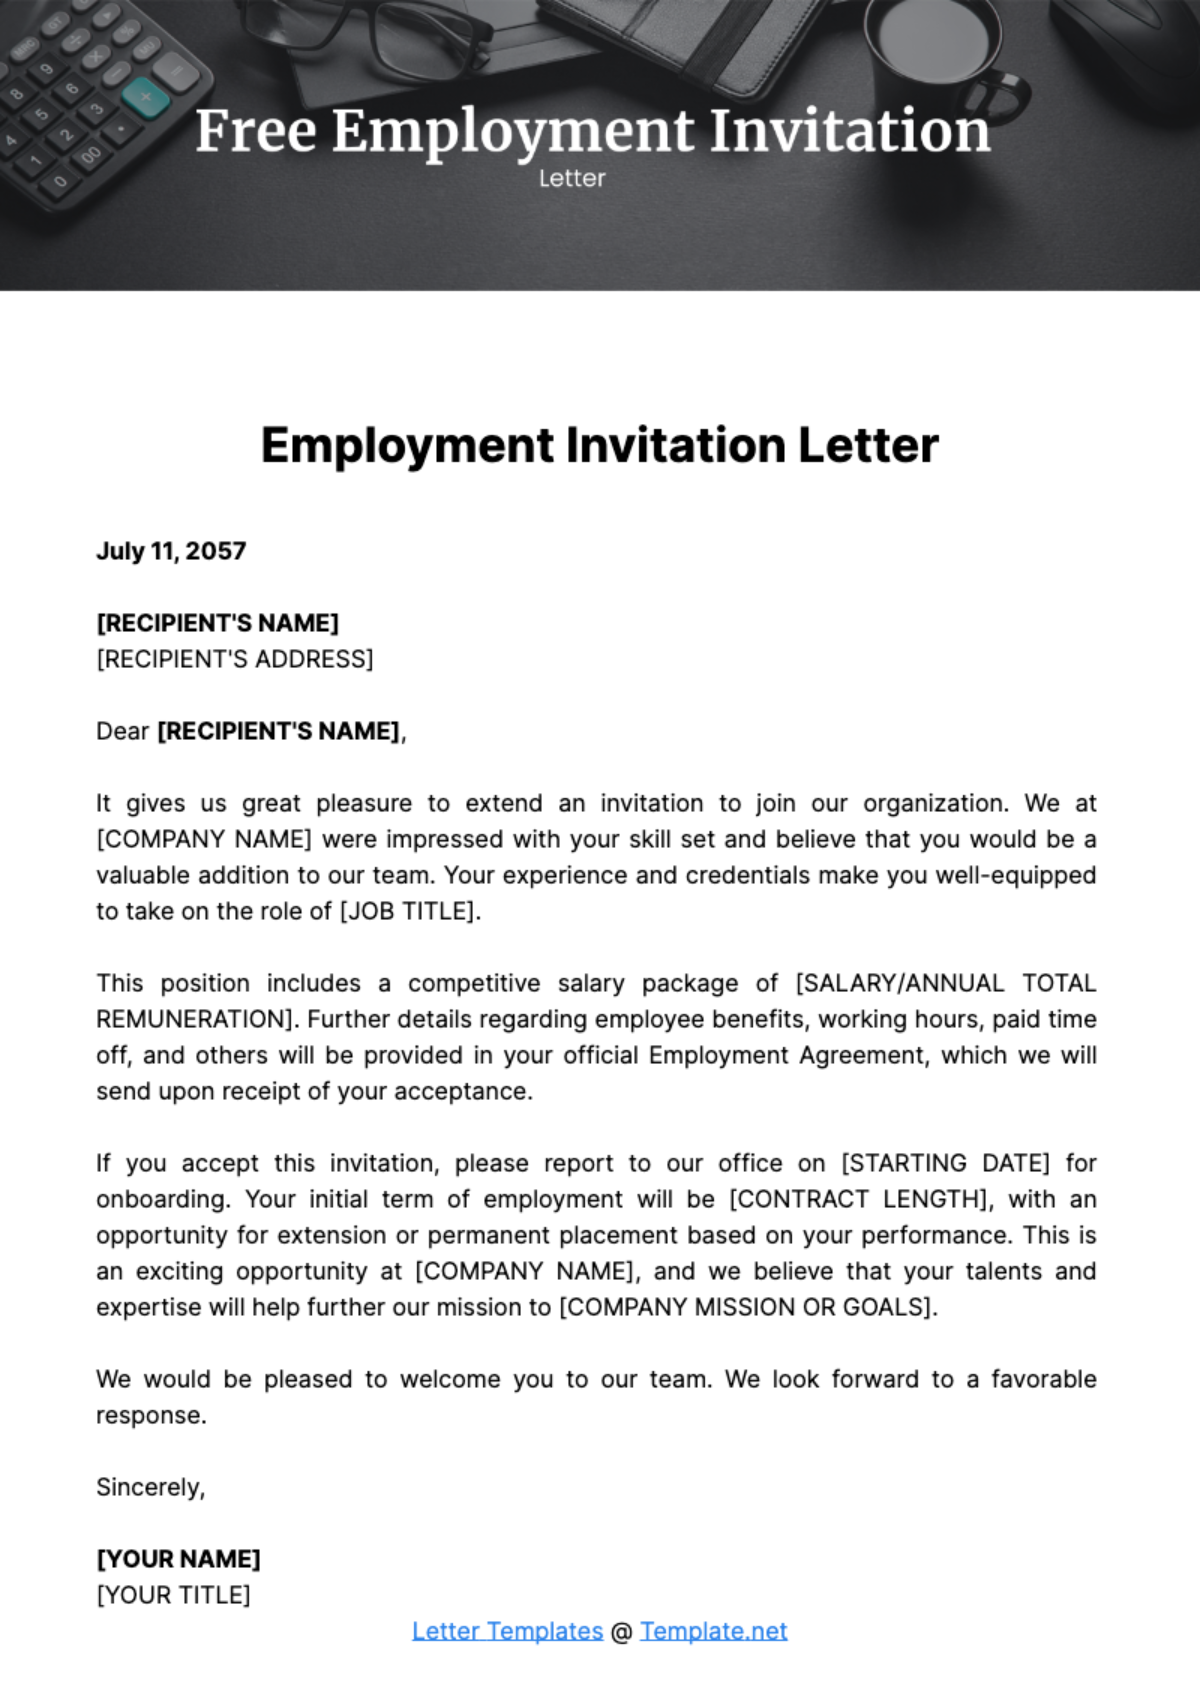 Employment Invitation Letter Template